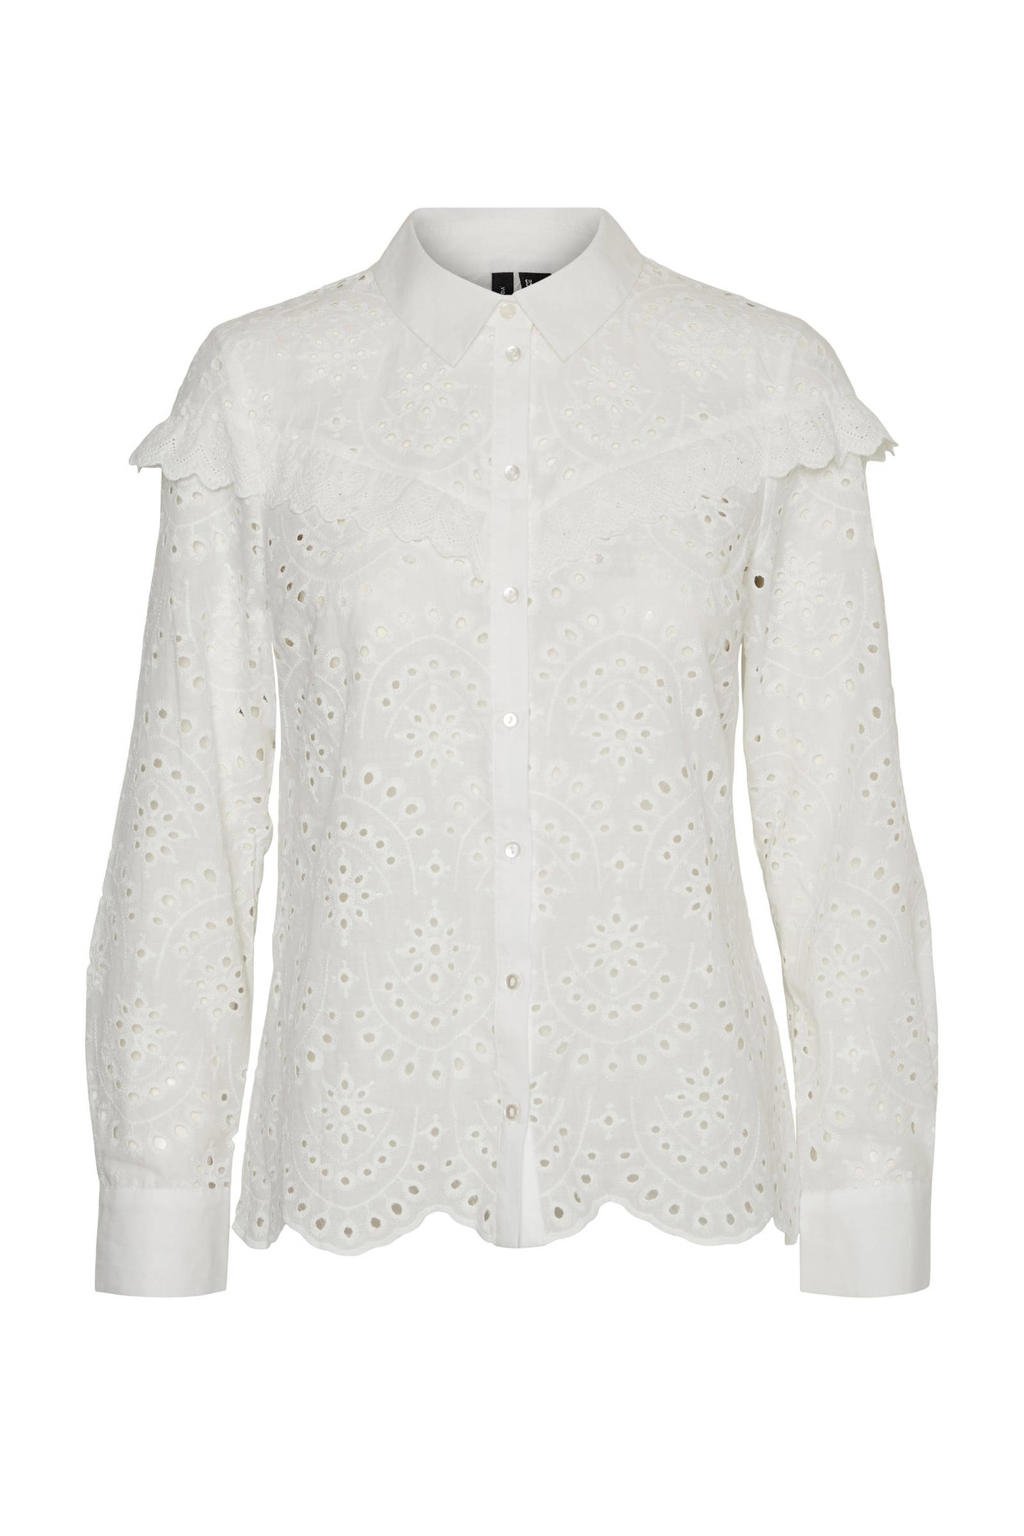 Witte dames VERO MODA blouse van katoen met lange mouwen, klassieke kraag, knoopsluiting en broderie